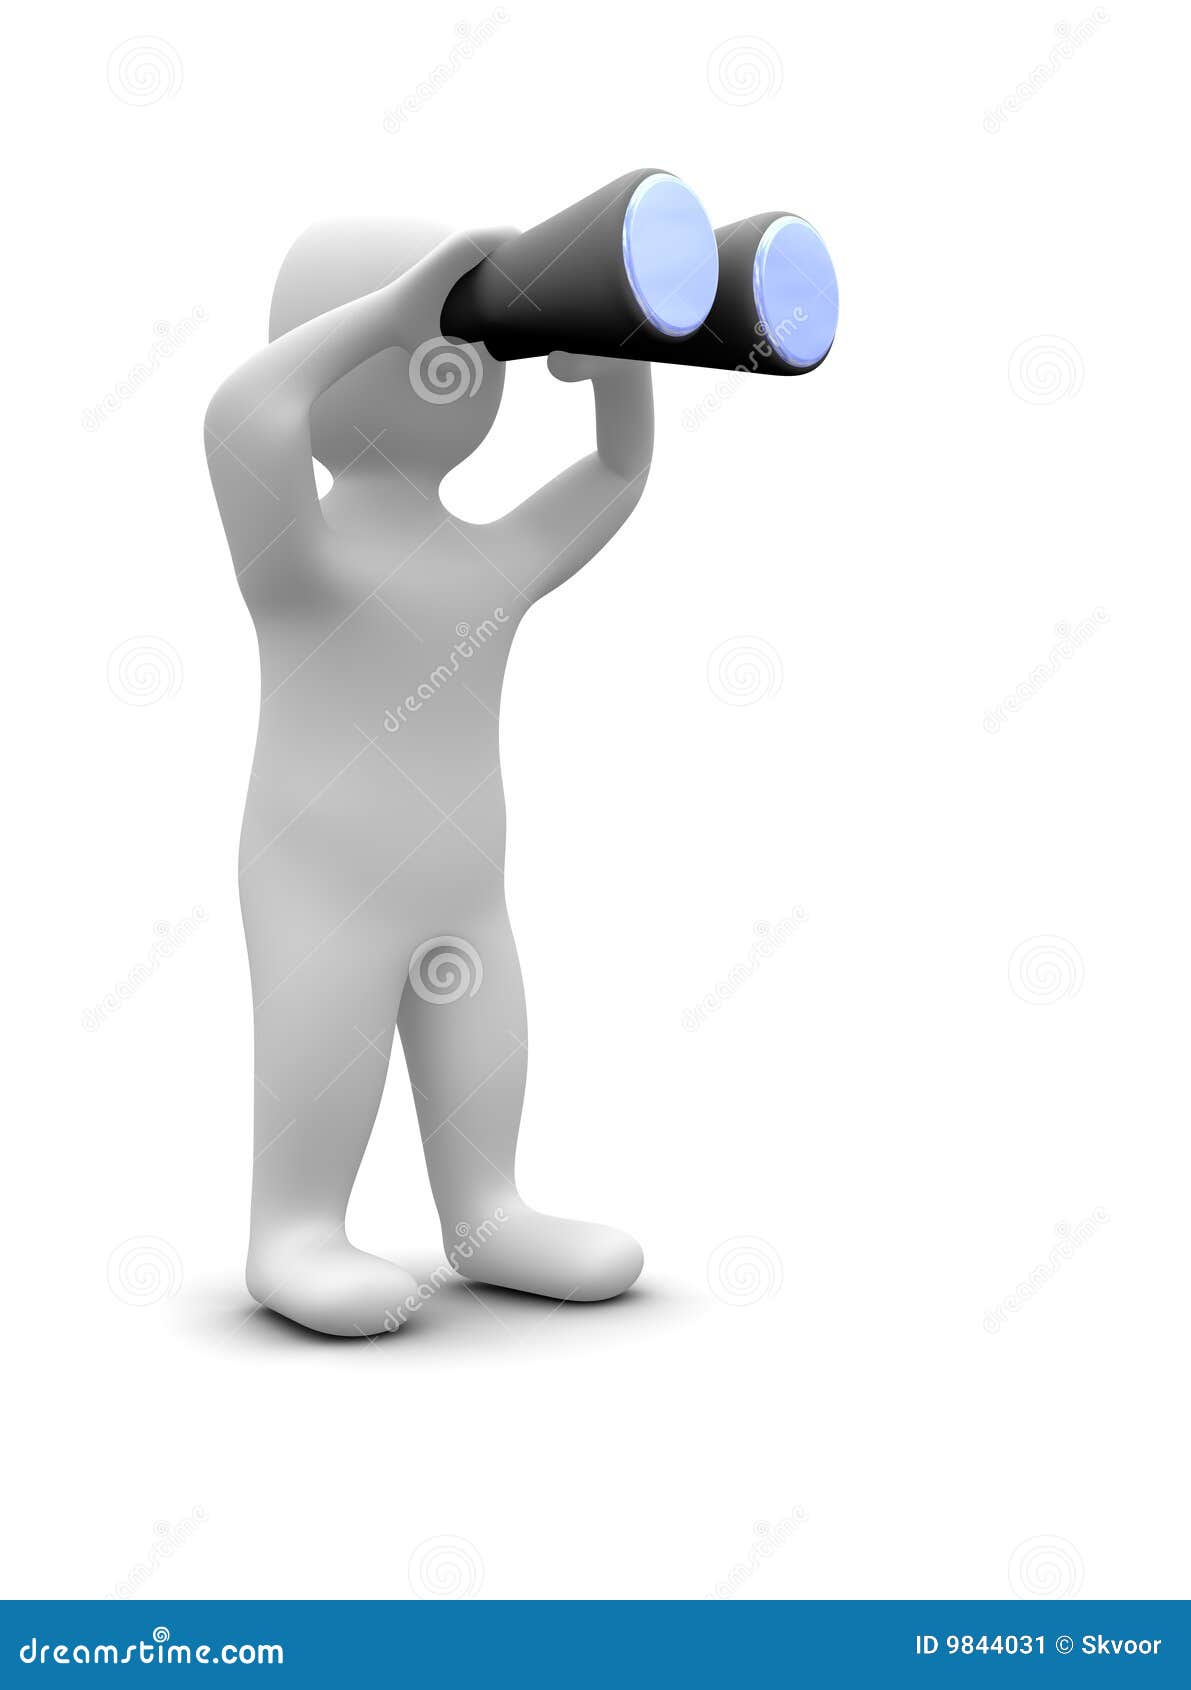 clipart man with binoculars - photo #11